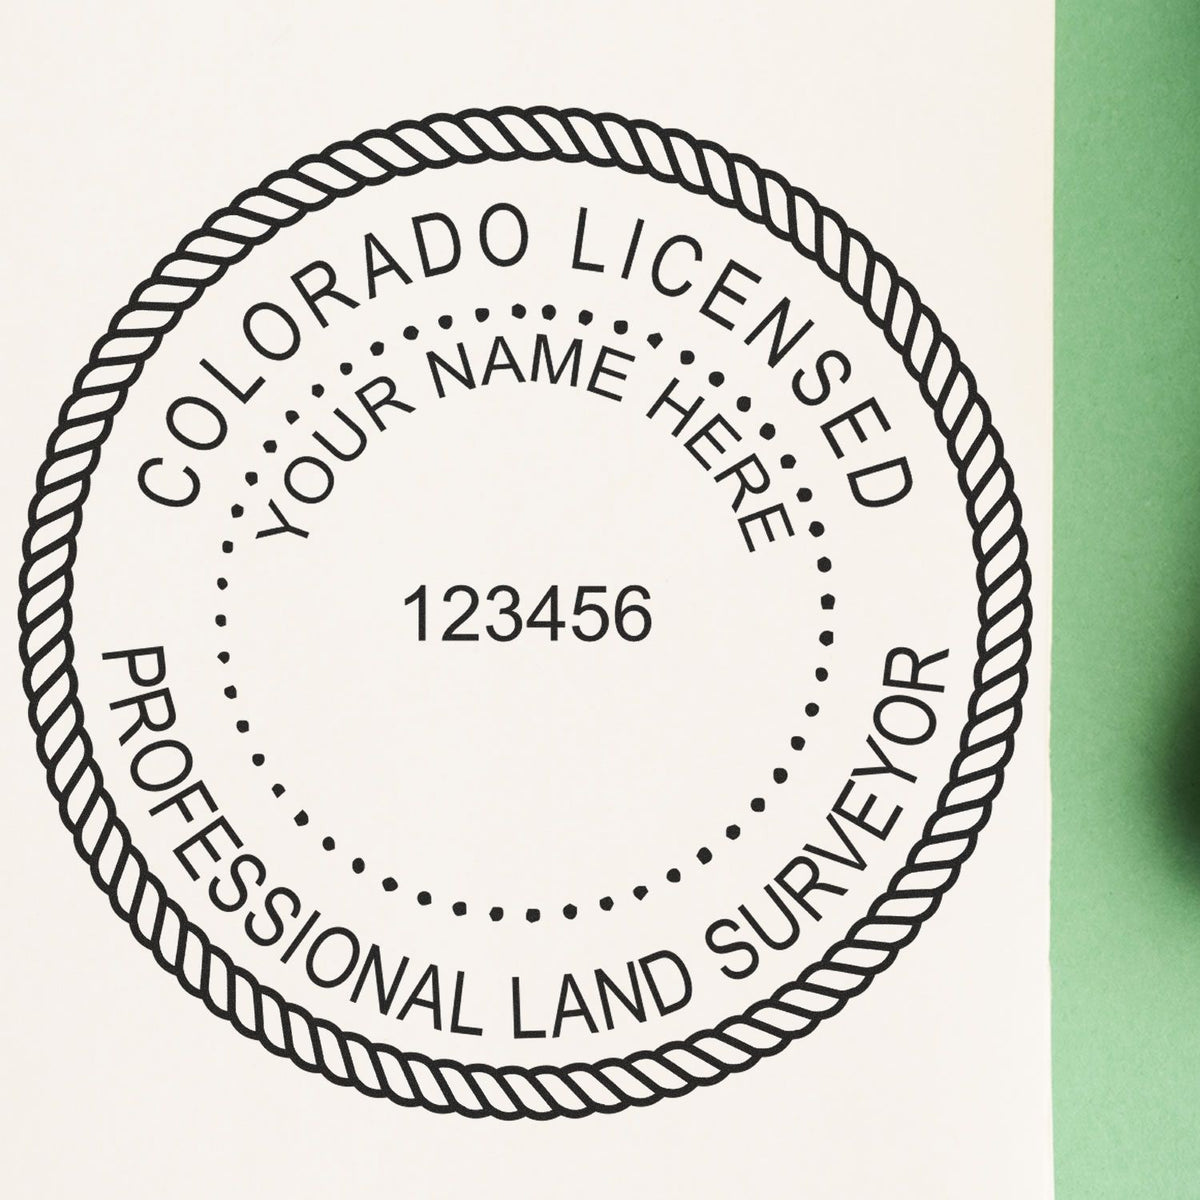 Colorado Land Surveyor Seal Stamp In Use Photo